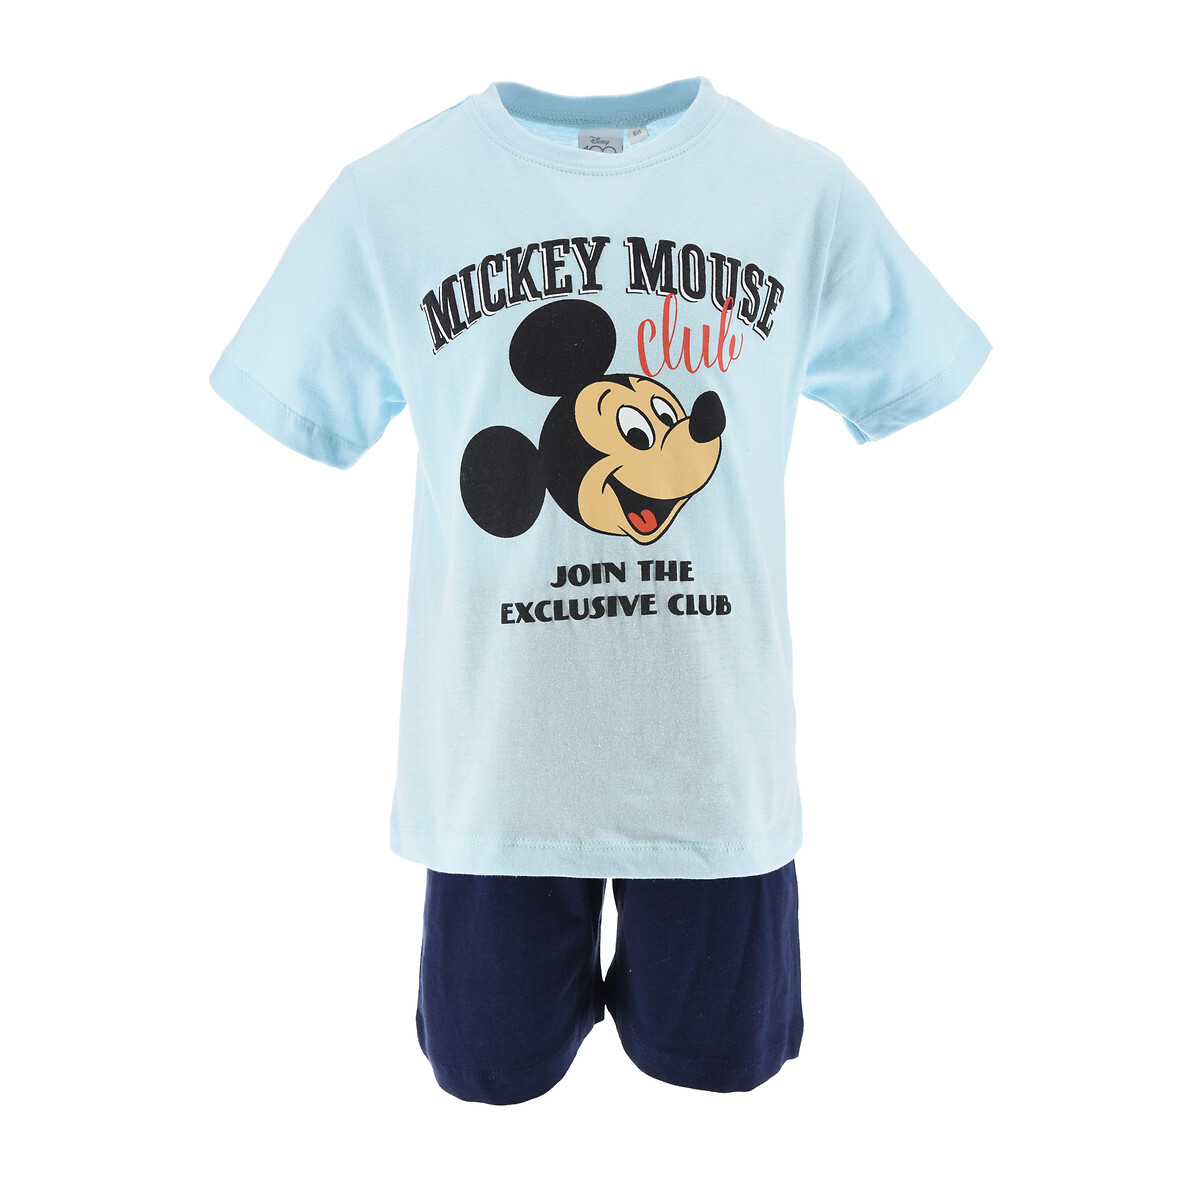 Kurzpyjama "Micky Maus" von Mickey Mouse